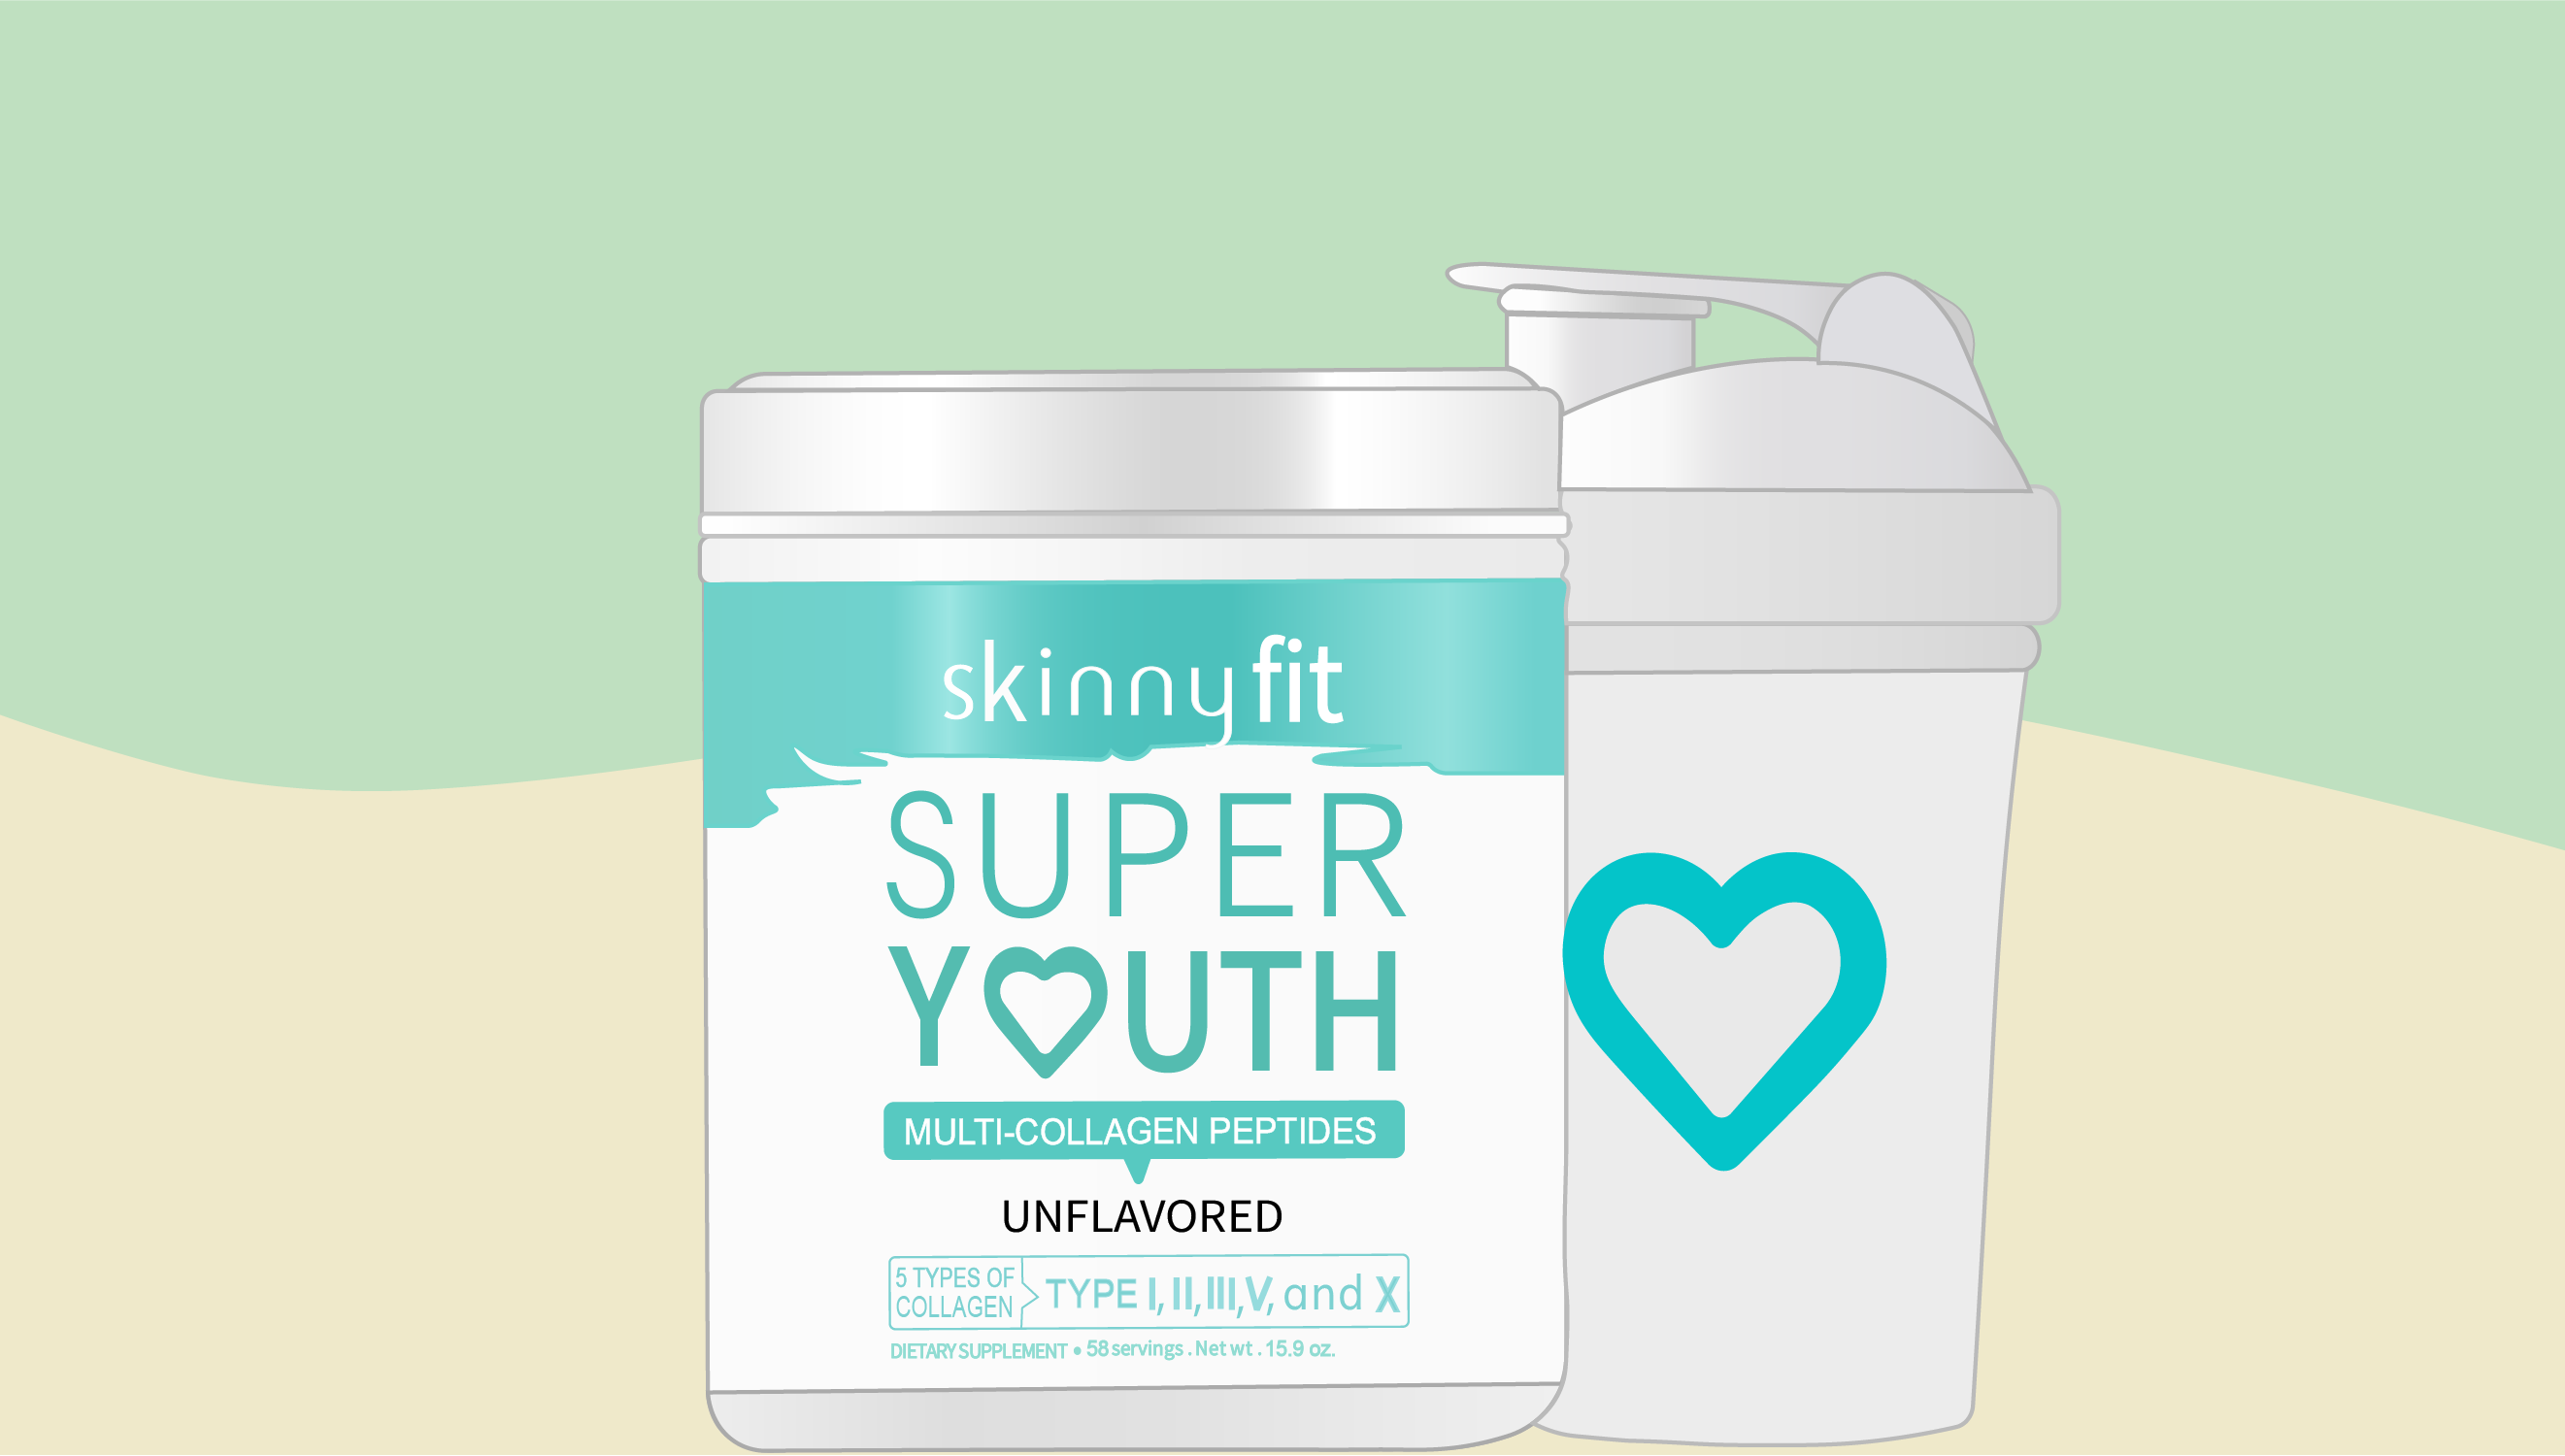 Skinnyfit Super Youth Supplment In Center